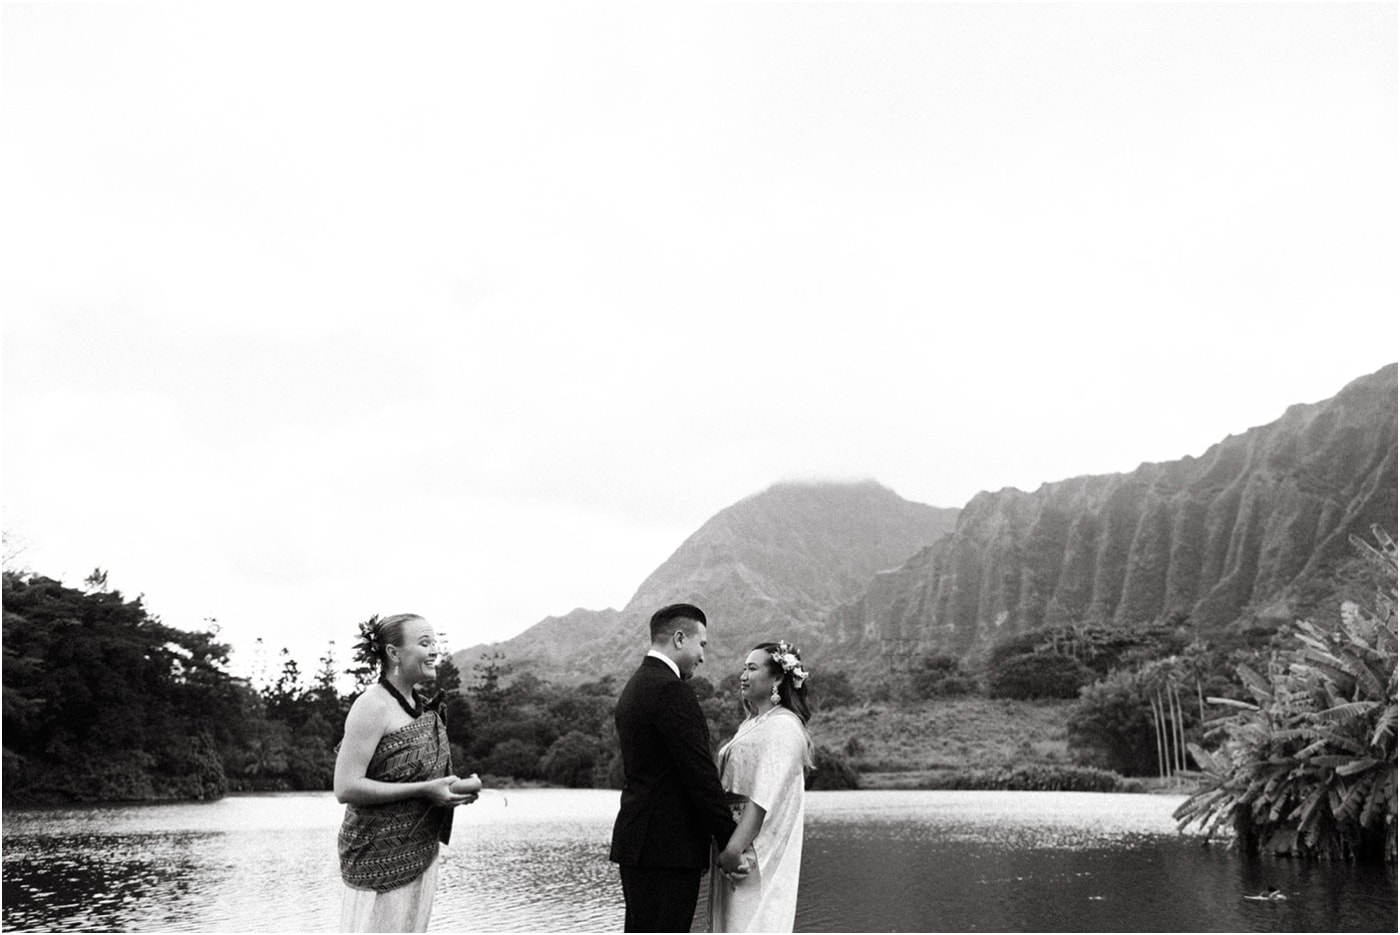 Hawaii mountain elopement on Oahu